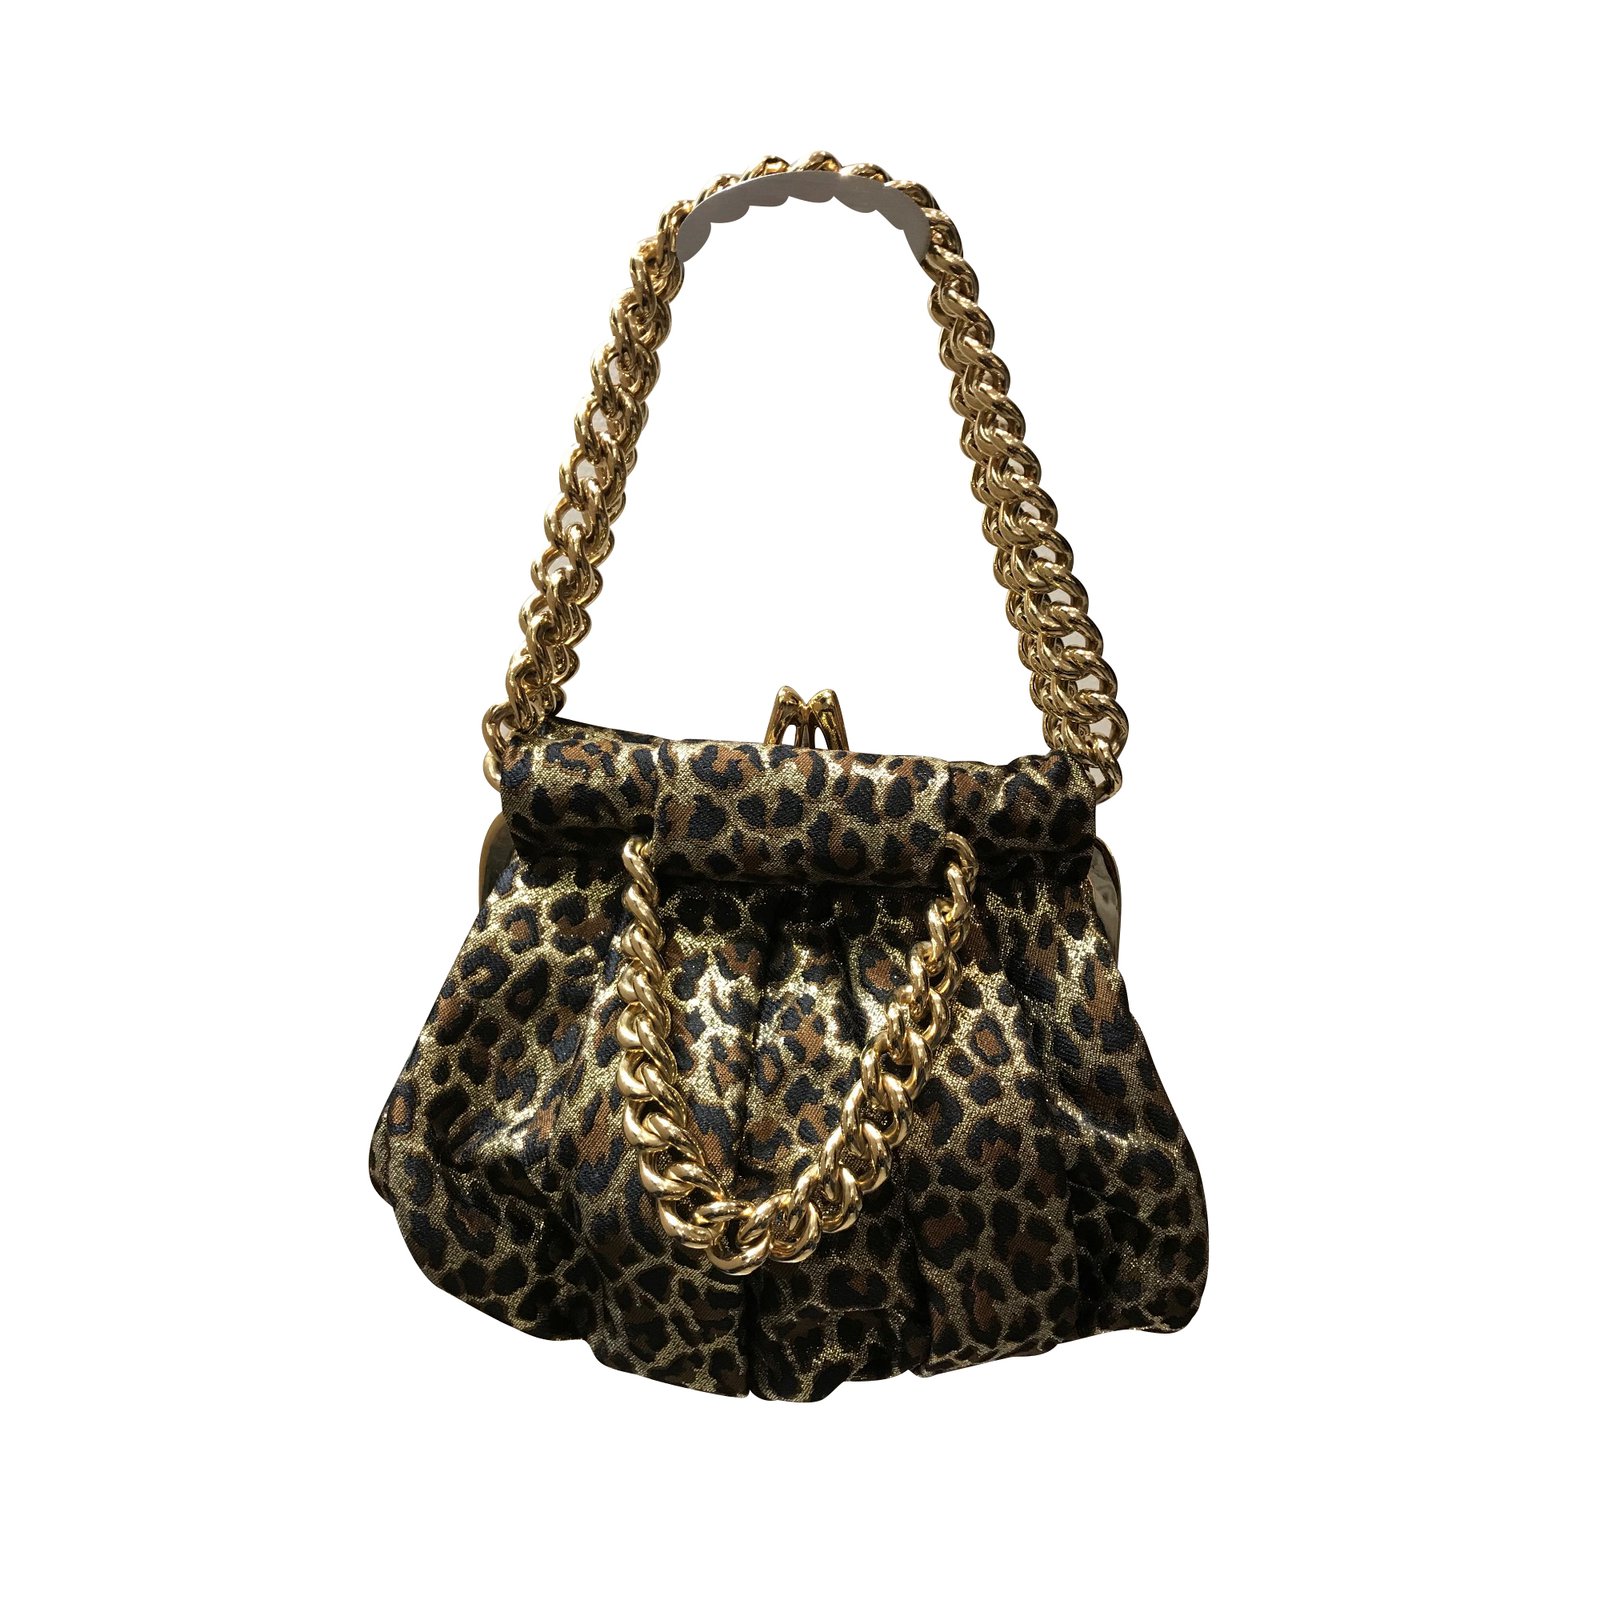 louboutin leopard bag